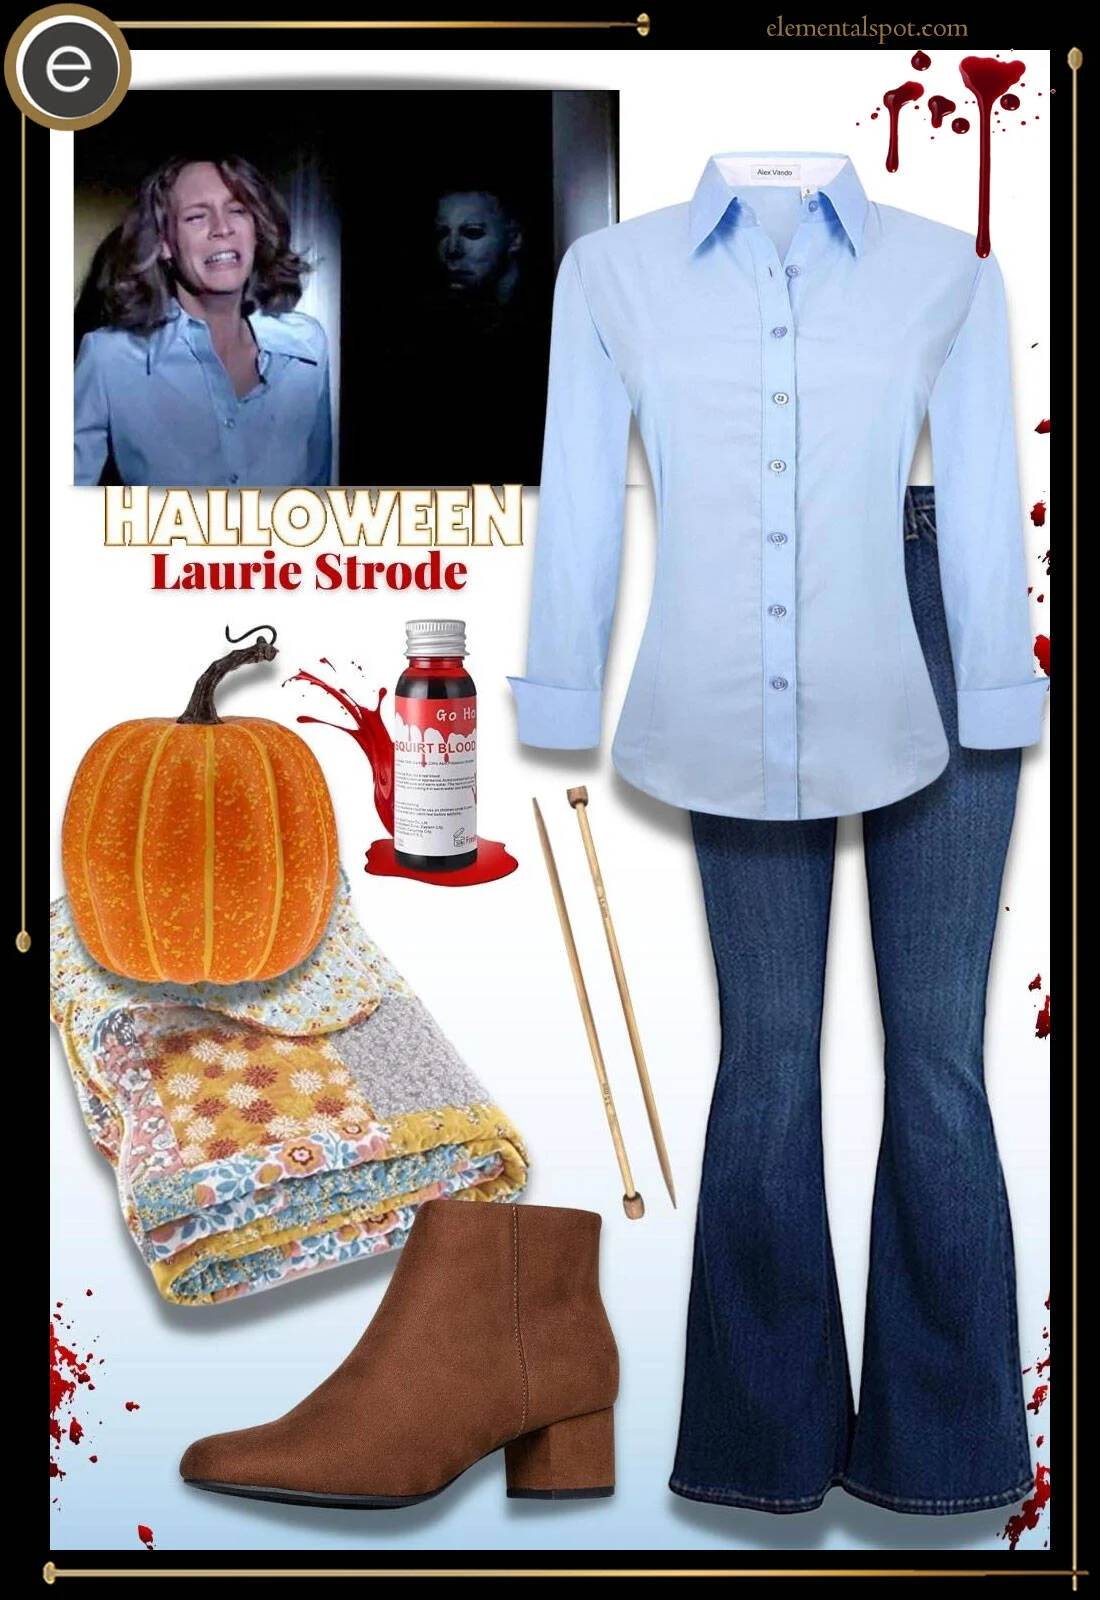 Dress Up Like Laurie Strode from Halloween - Elemental Spot